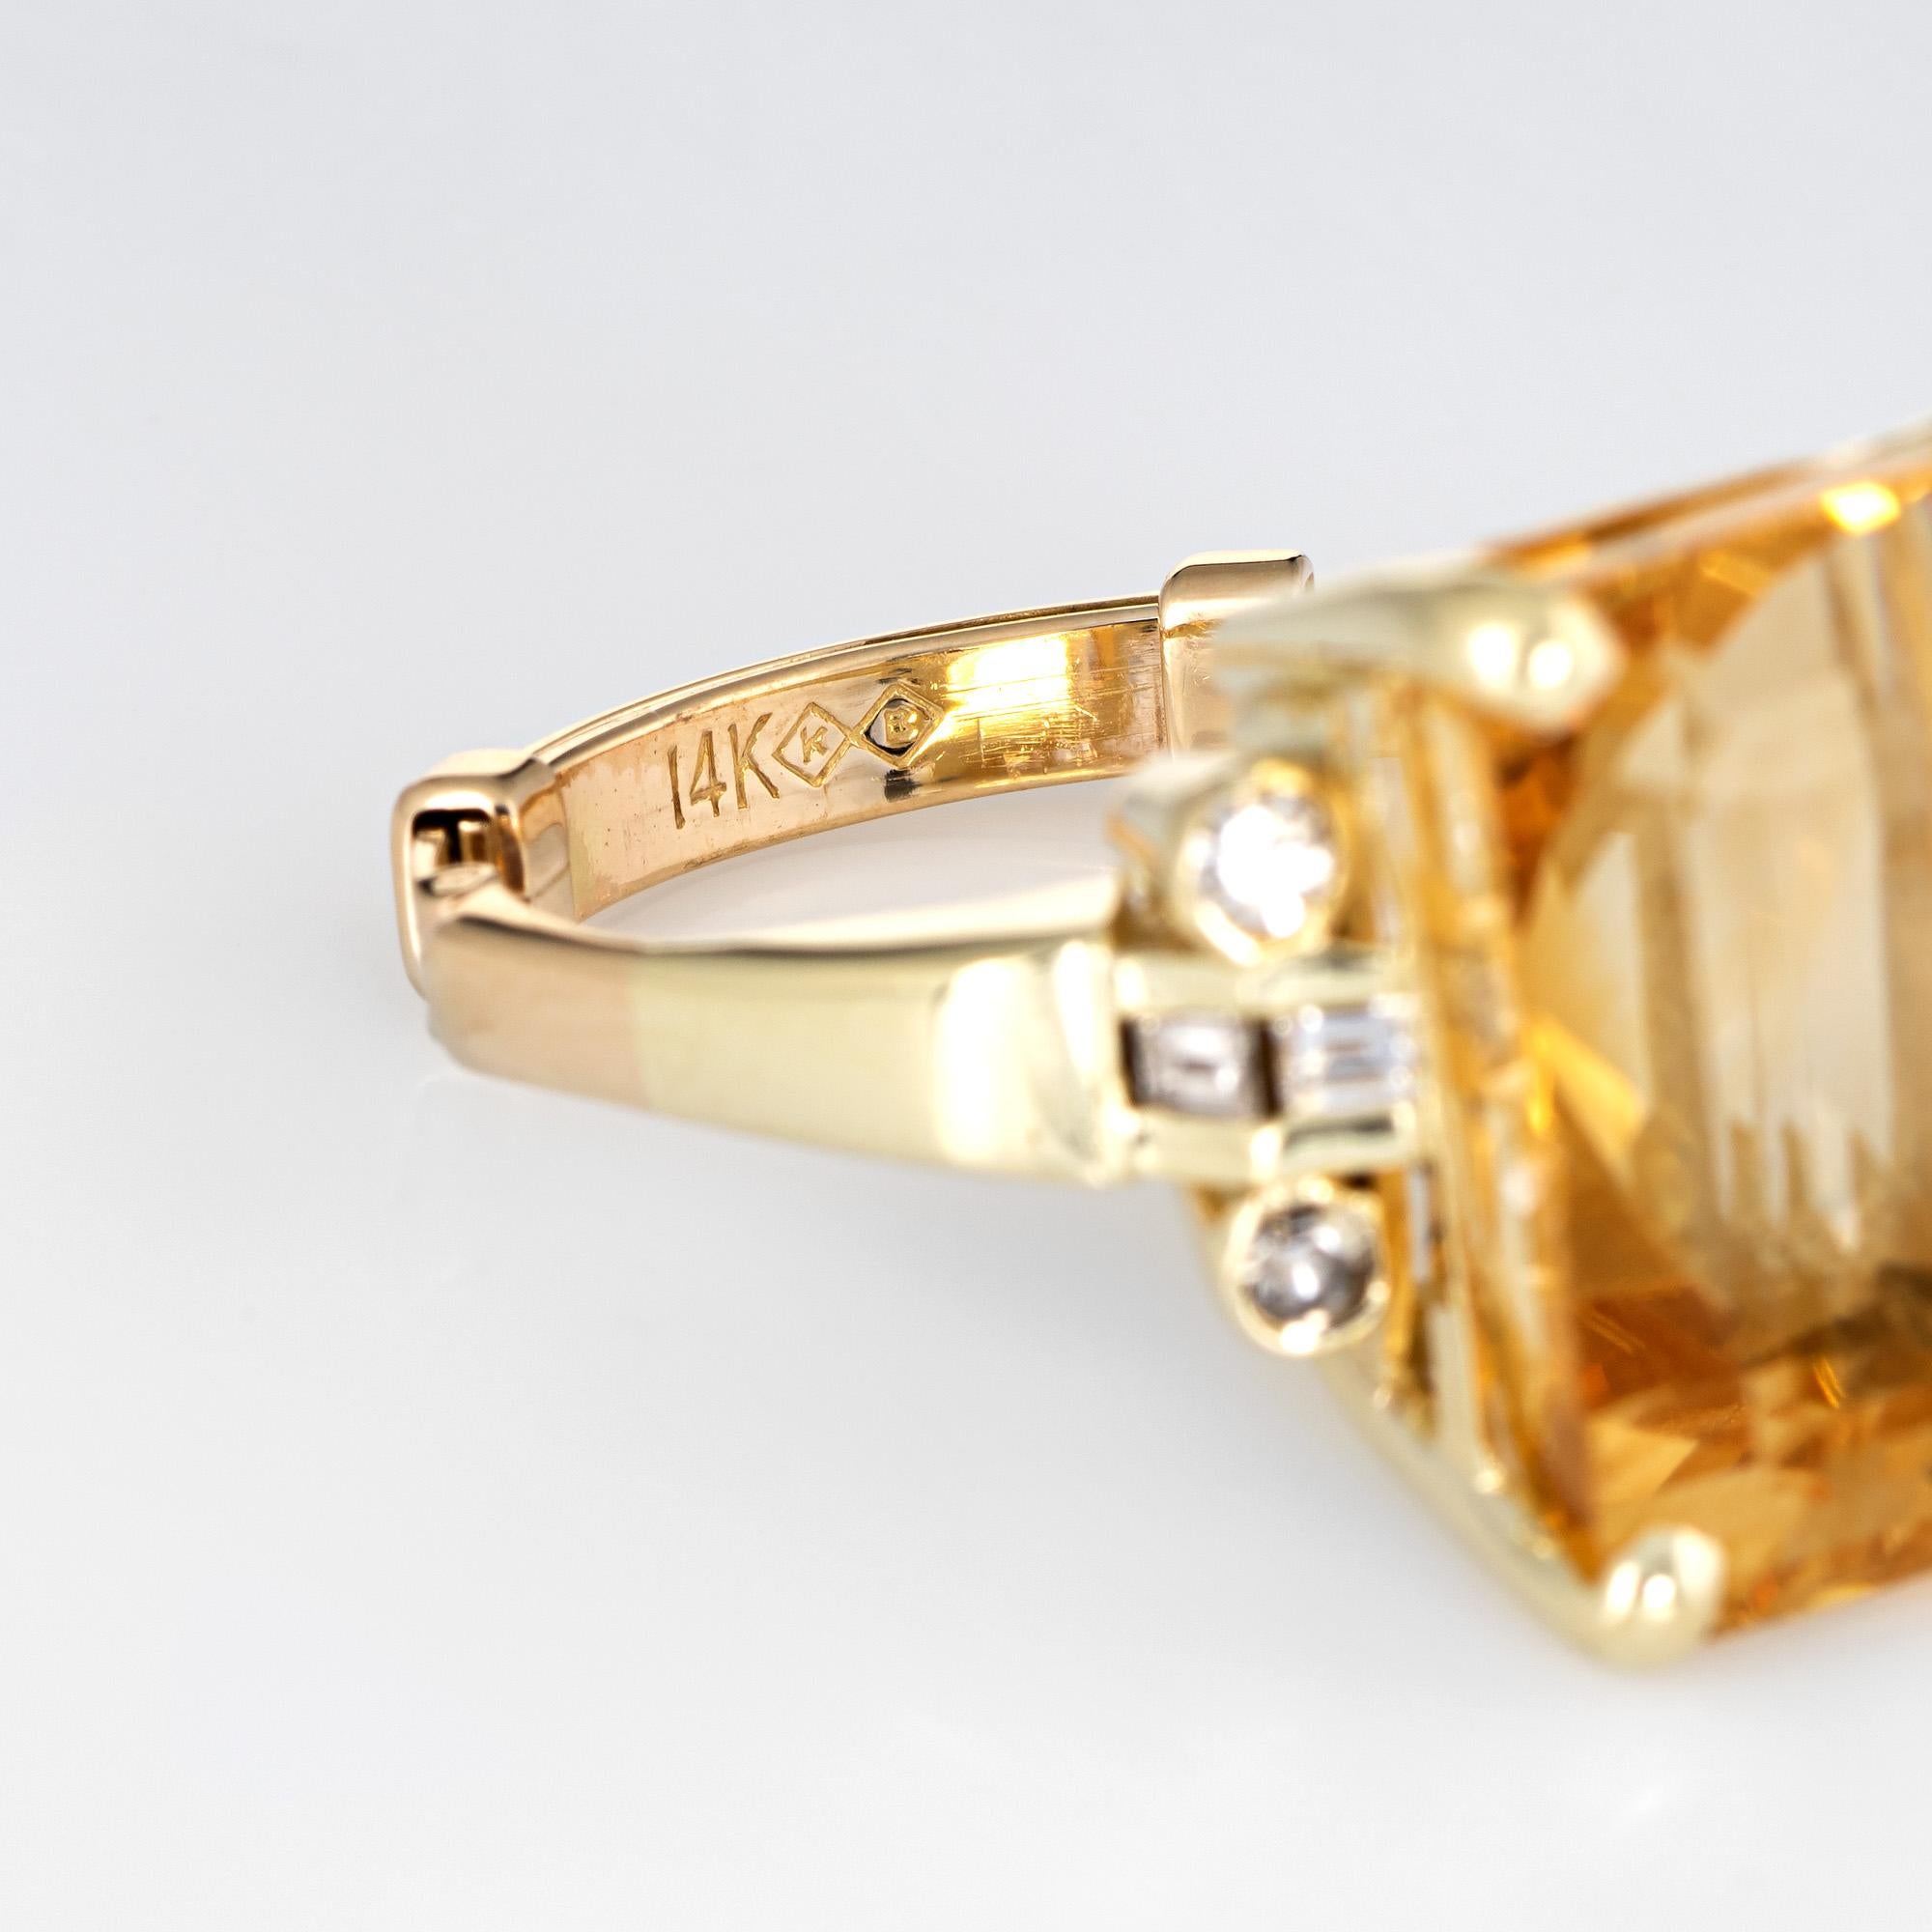 Emerald Cut 12 Carat Citrine Diamond Ring Vintage 14k Gold Arthritis Band Estate Jewelry